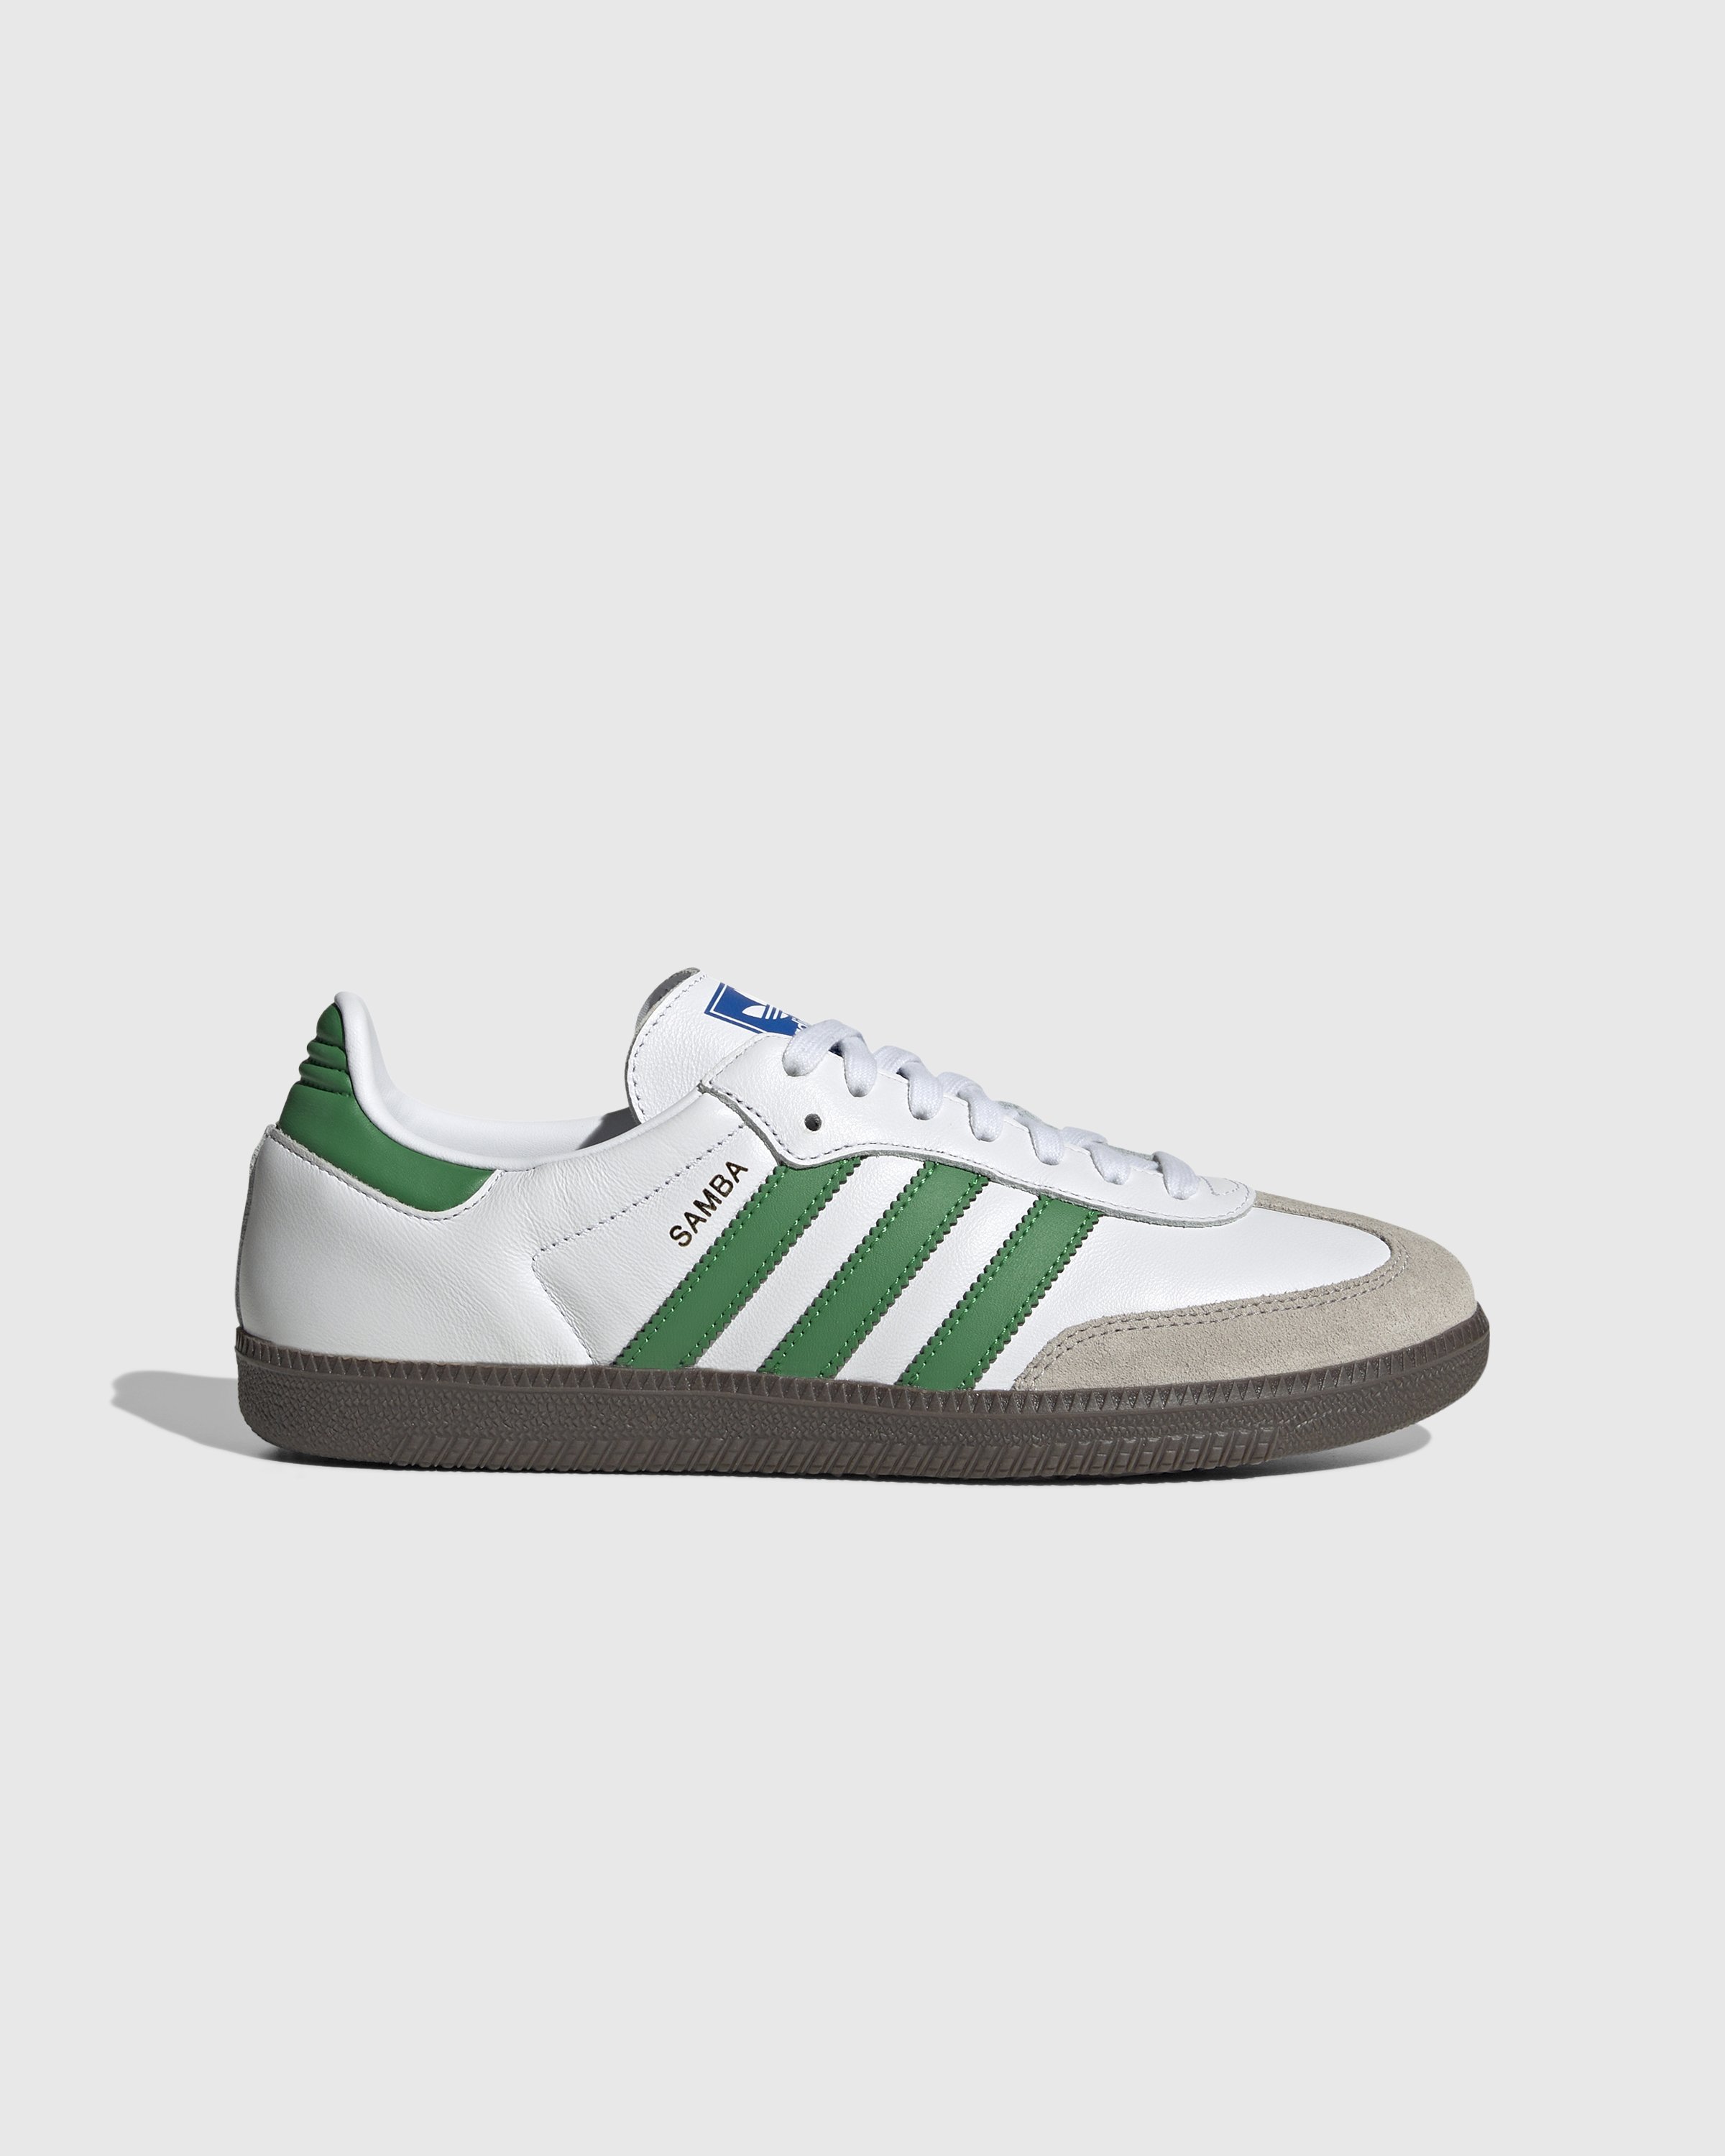 Adidas - Samba OG White/Green - Footwear - White - Image 1